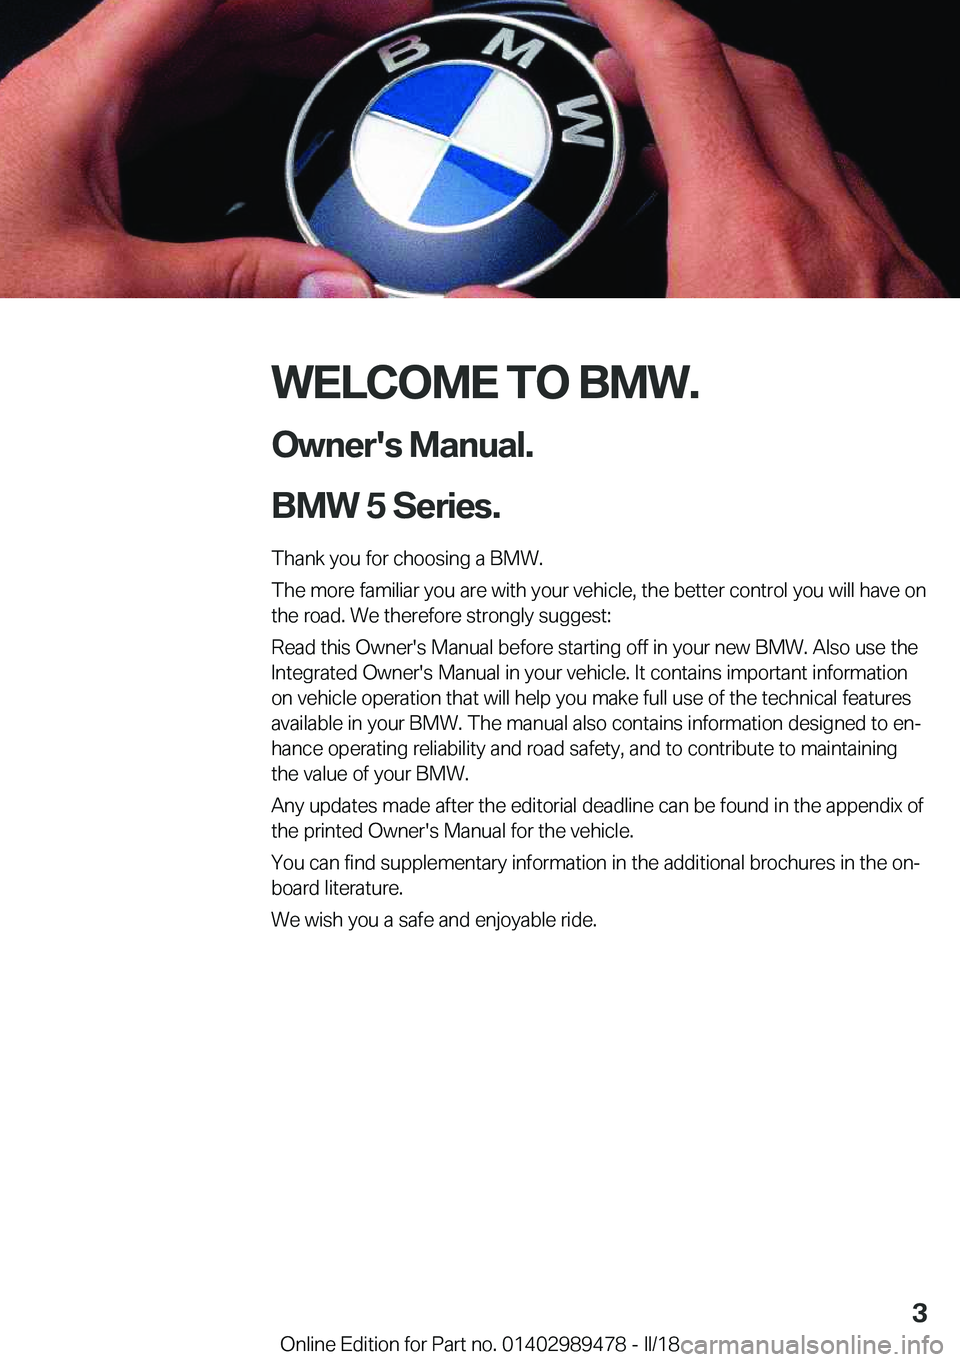 BMW 5 SERIES 2018  Owners Manual �W�E�L�C�O�M�E��T�O��B�M�W�.�O�w�n�e�r�'�s��M�a�n�u�a�l�.
�B�M�W��5��S�e�r�i�e�s�.
�T�h�a�n�k� �y�o�u� �f�o�r� �c�h�o�o�s�i�n�g� �a� �B�M�W�.
�T�h�e� �m�o�r�e� �f�a�m�i�l�i�a�r� �y�o�u� �a�r�